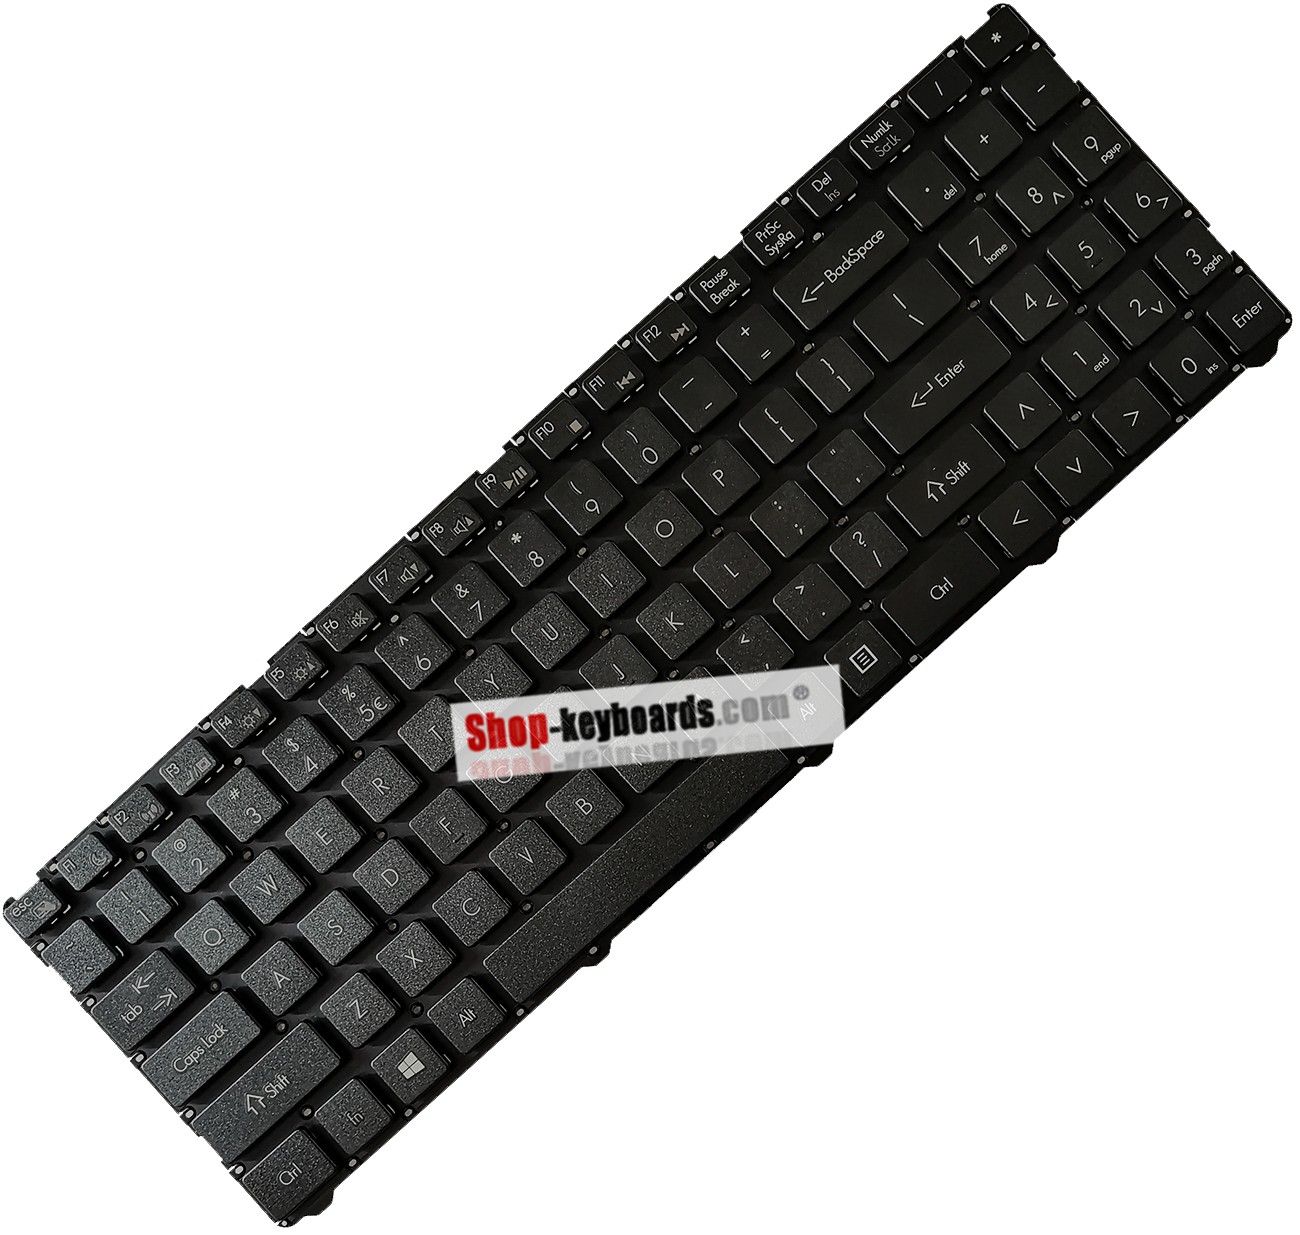 LG 15UD470-GX51K Keyboard replacement